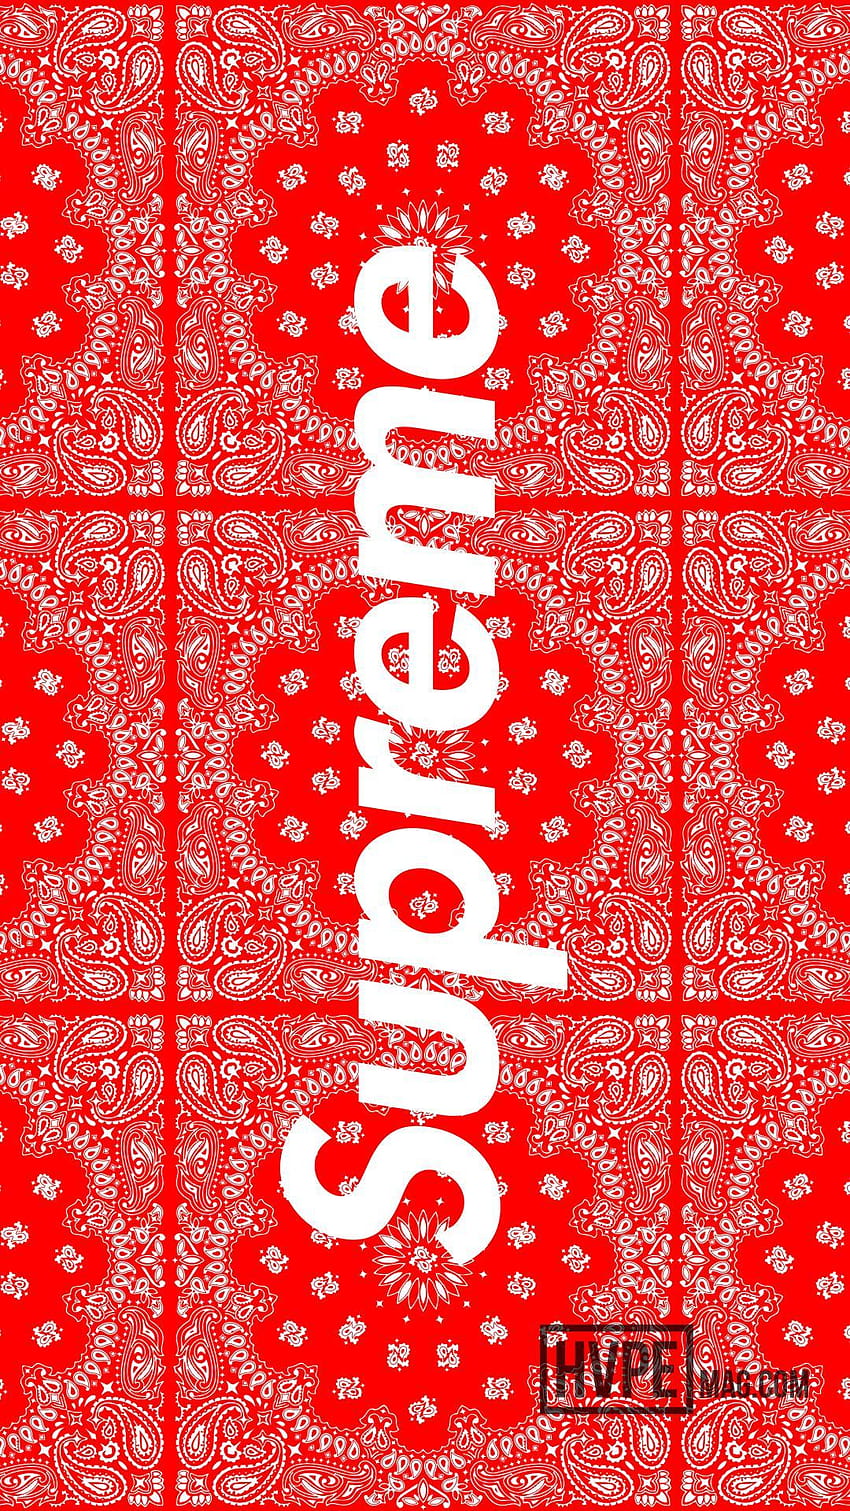 Gucci Iphone X, supreme gucci HD phone wallpaper